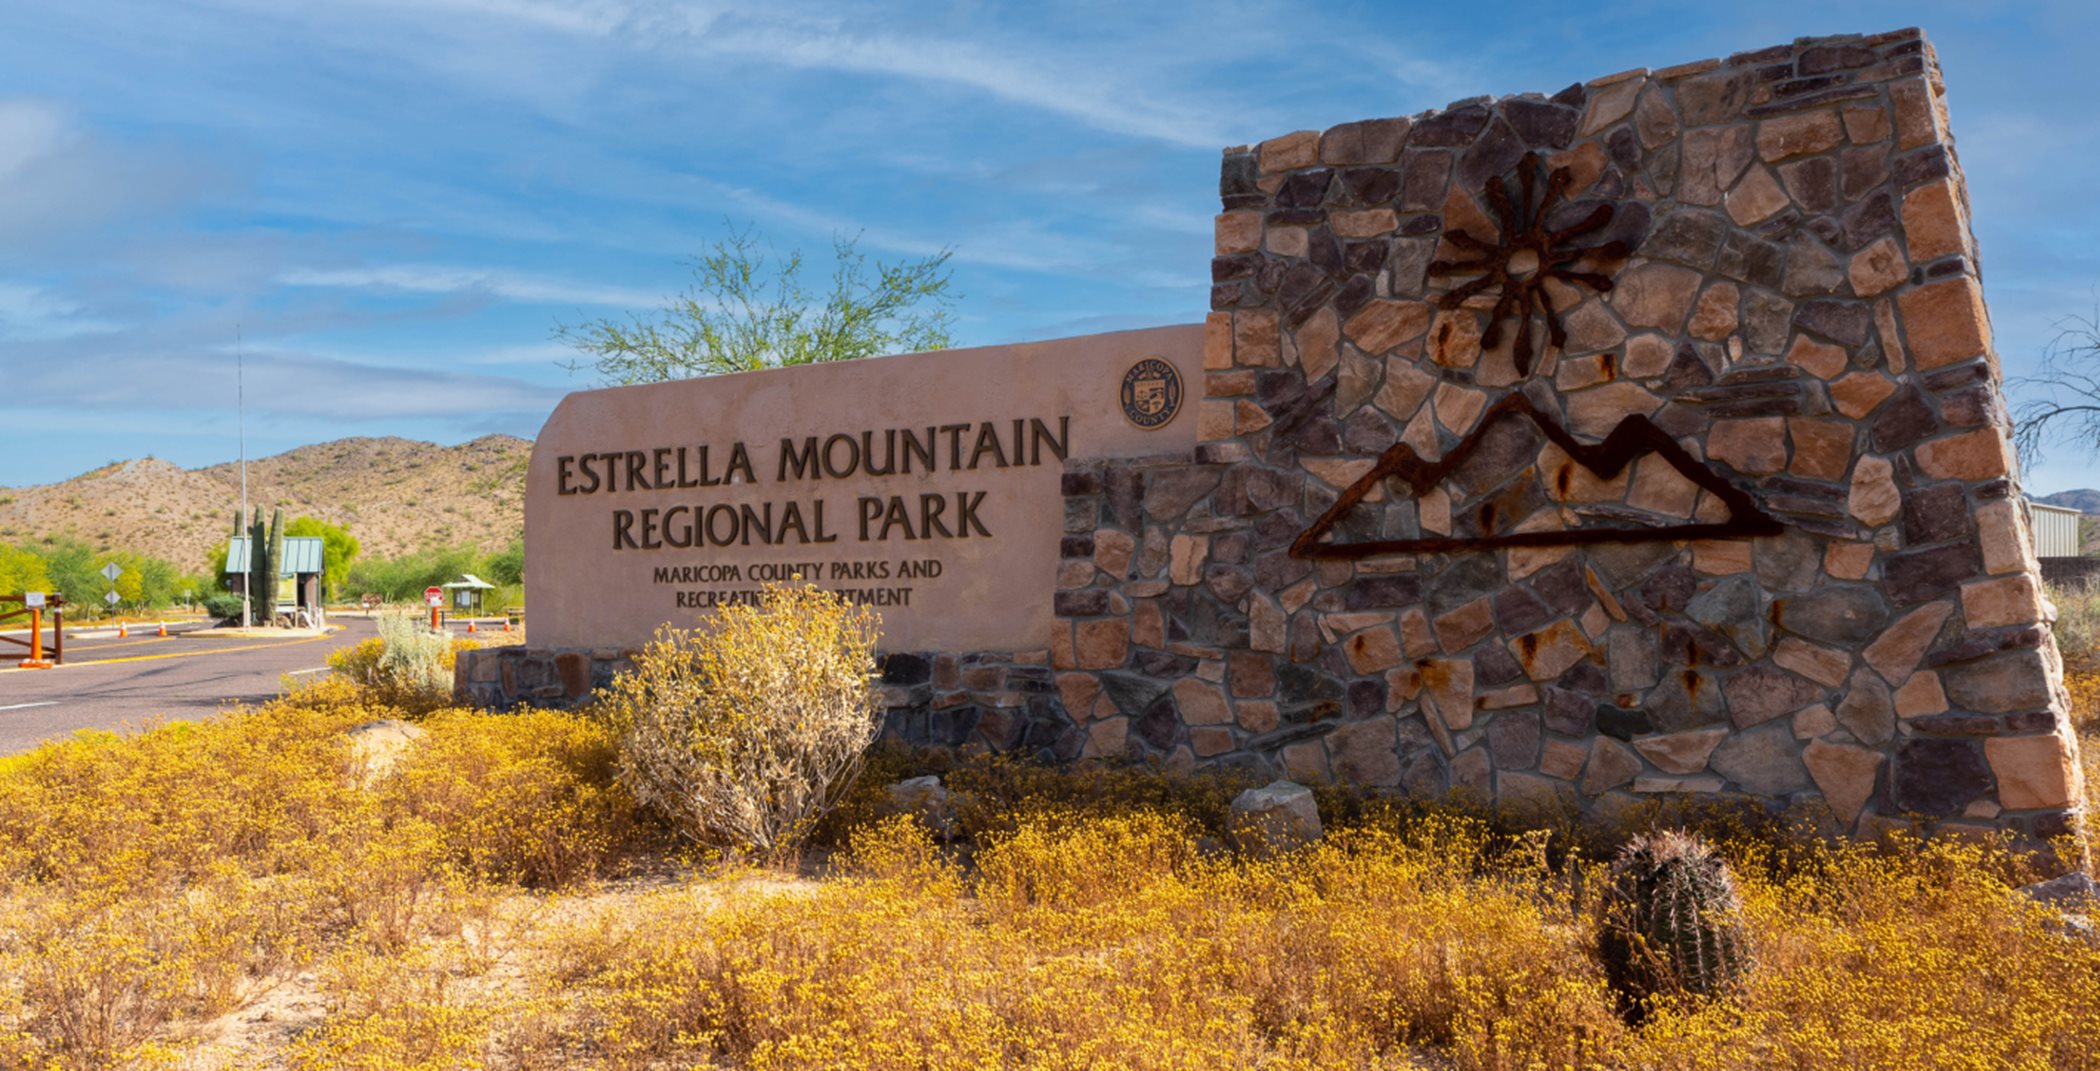 Estrella Mountain Regional Park entry